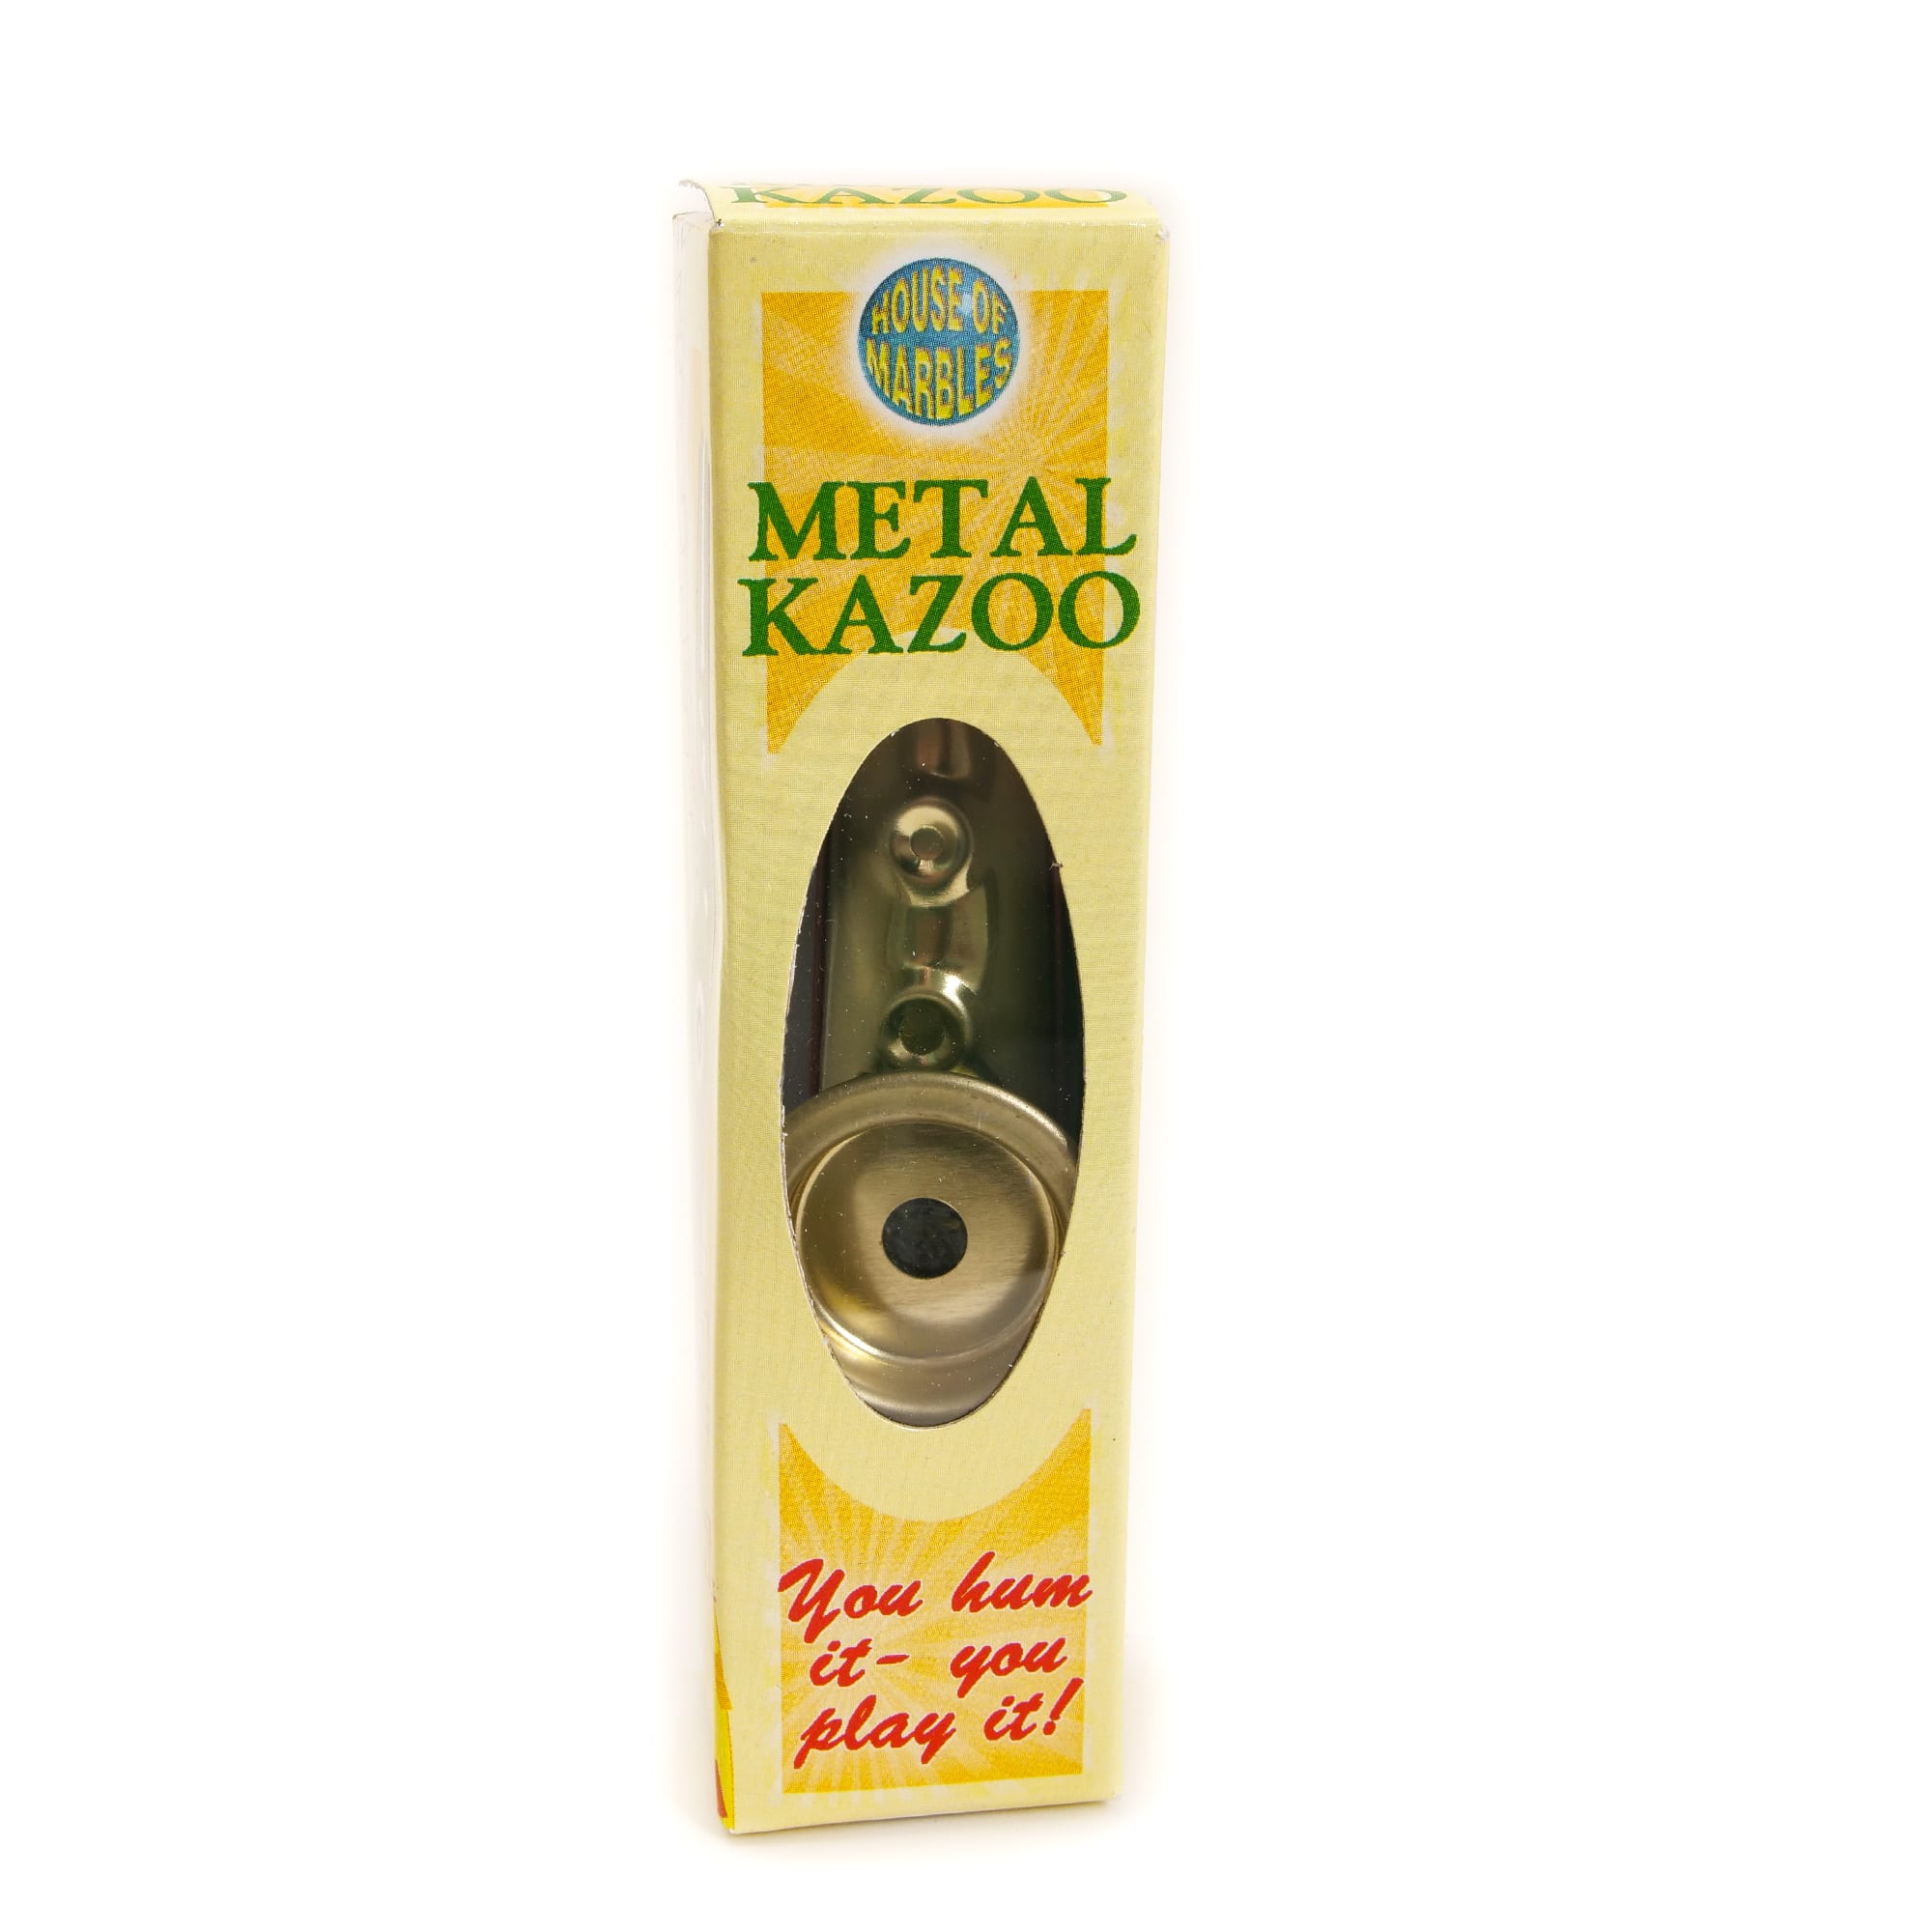 Metal Kazoo - House of Marbles US